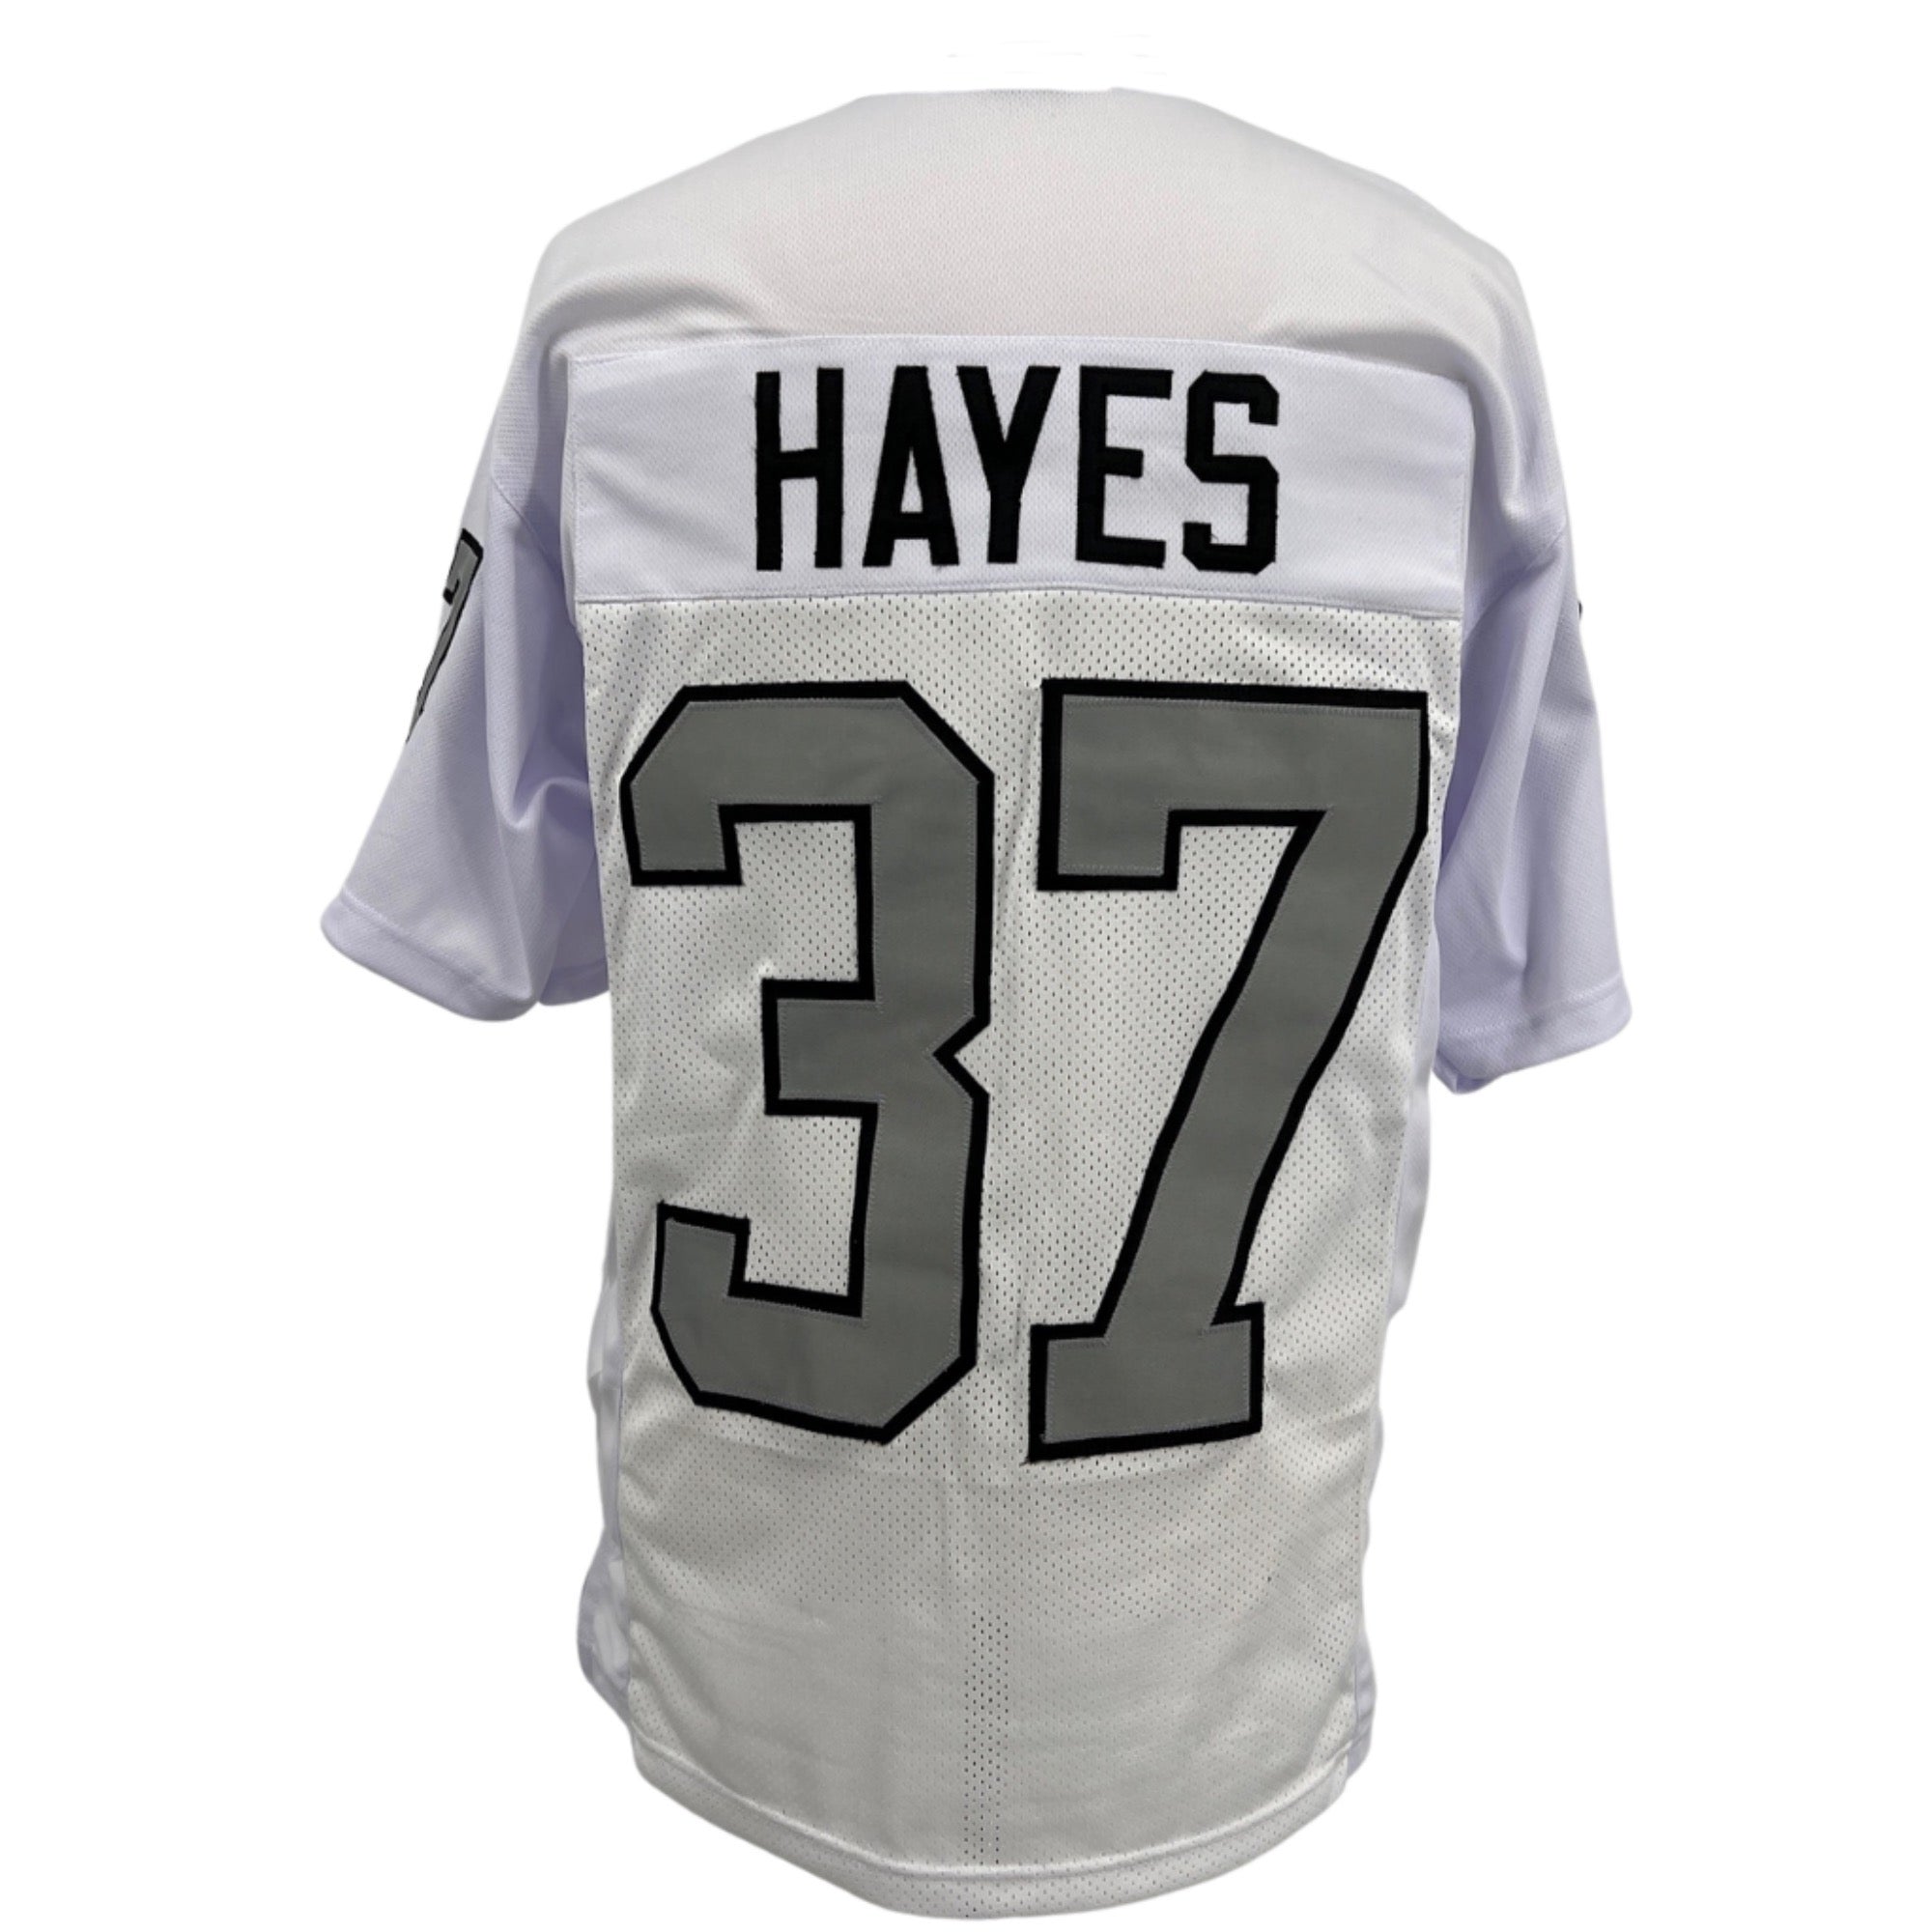 LESTER HAYES Oakland Raiders WHITE Jersey S/B M-5XL Unsigned Custom Sewn Stitch